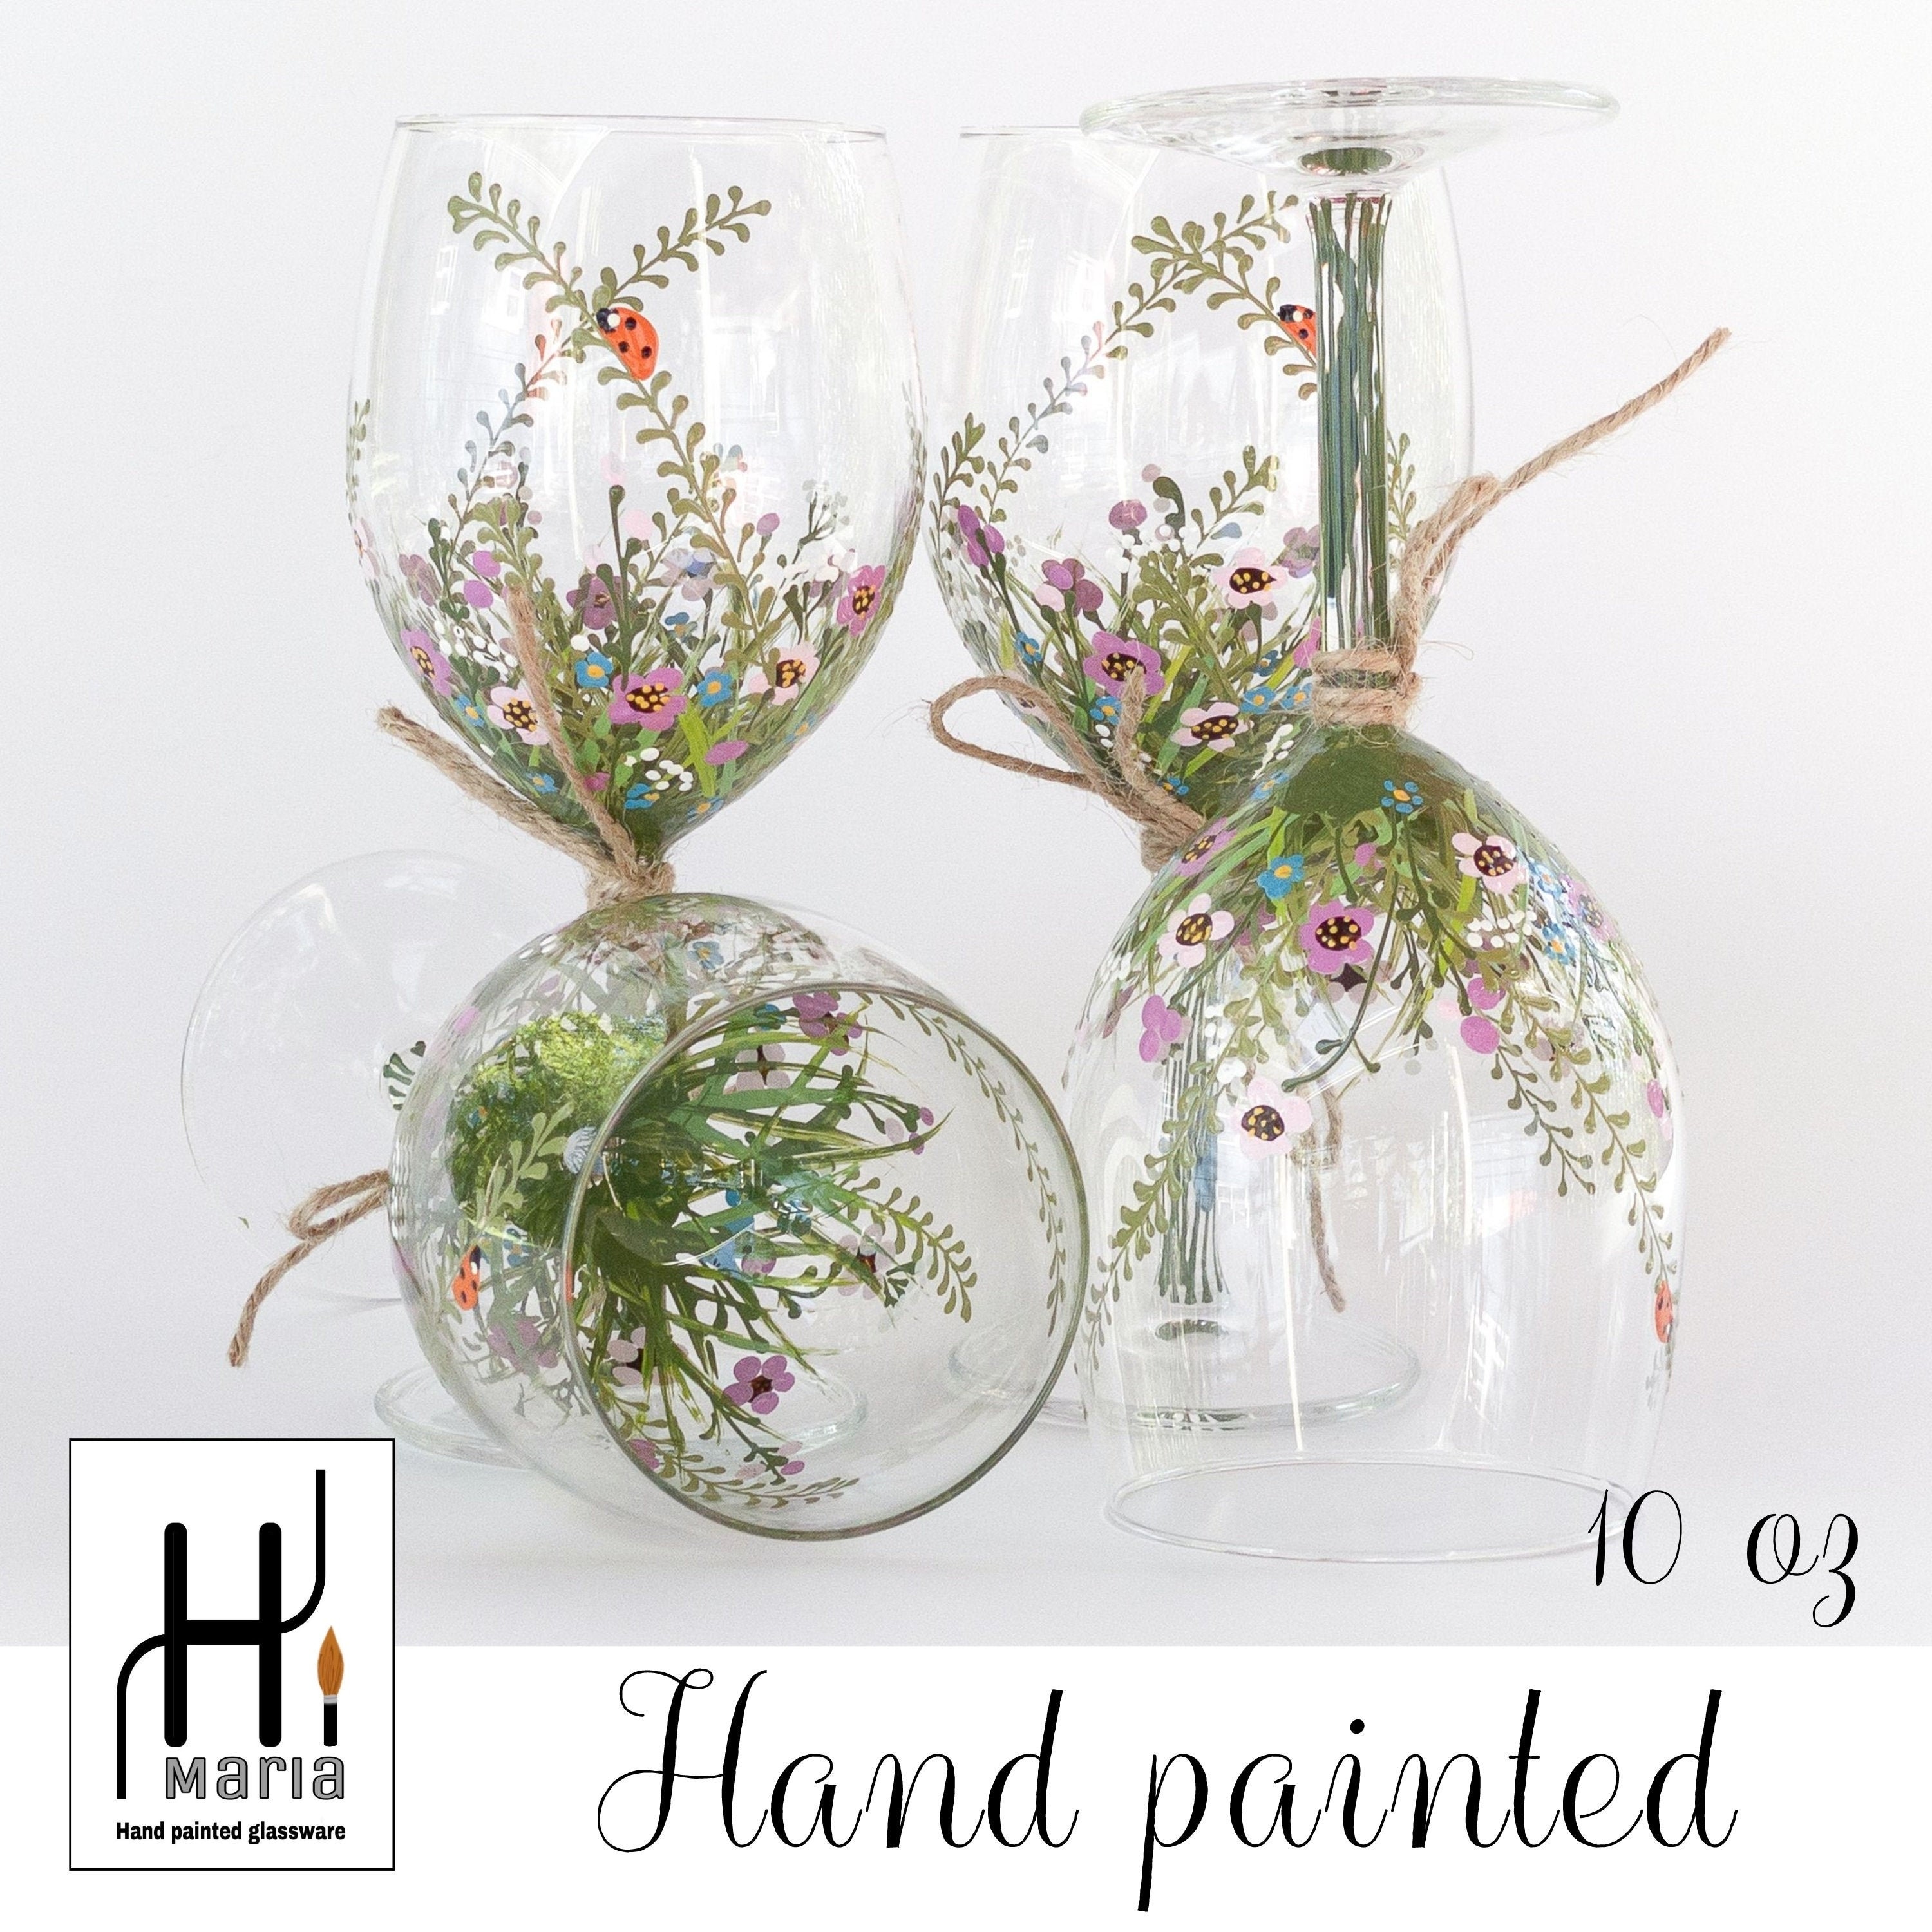 Cute Artisan Hand Painted Dandelion Stem 16 oz Wine Glass 8.5 tall.